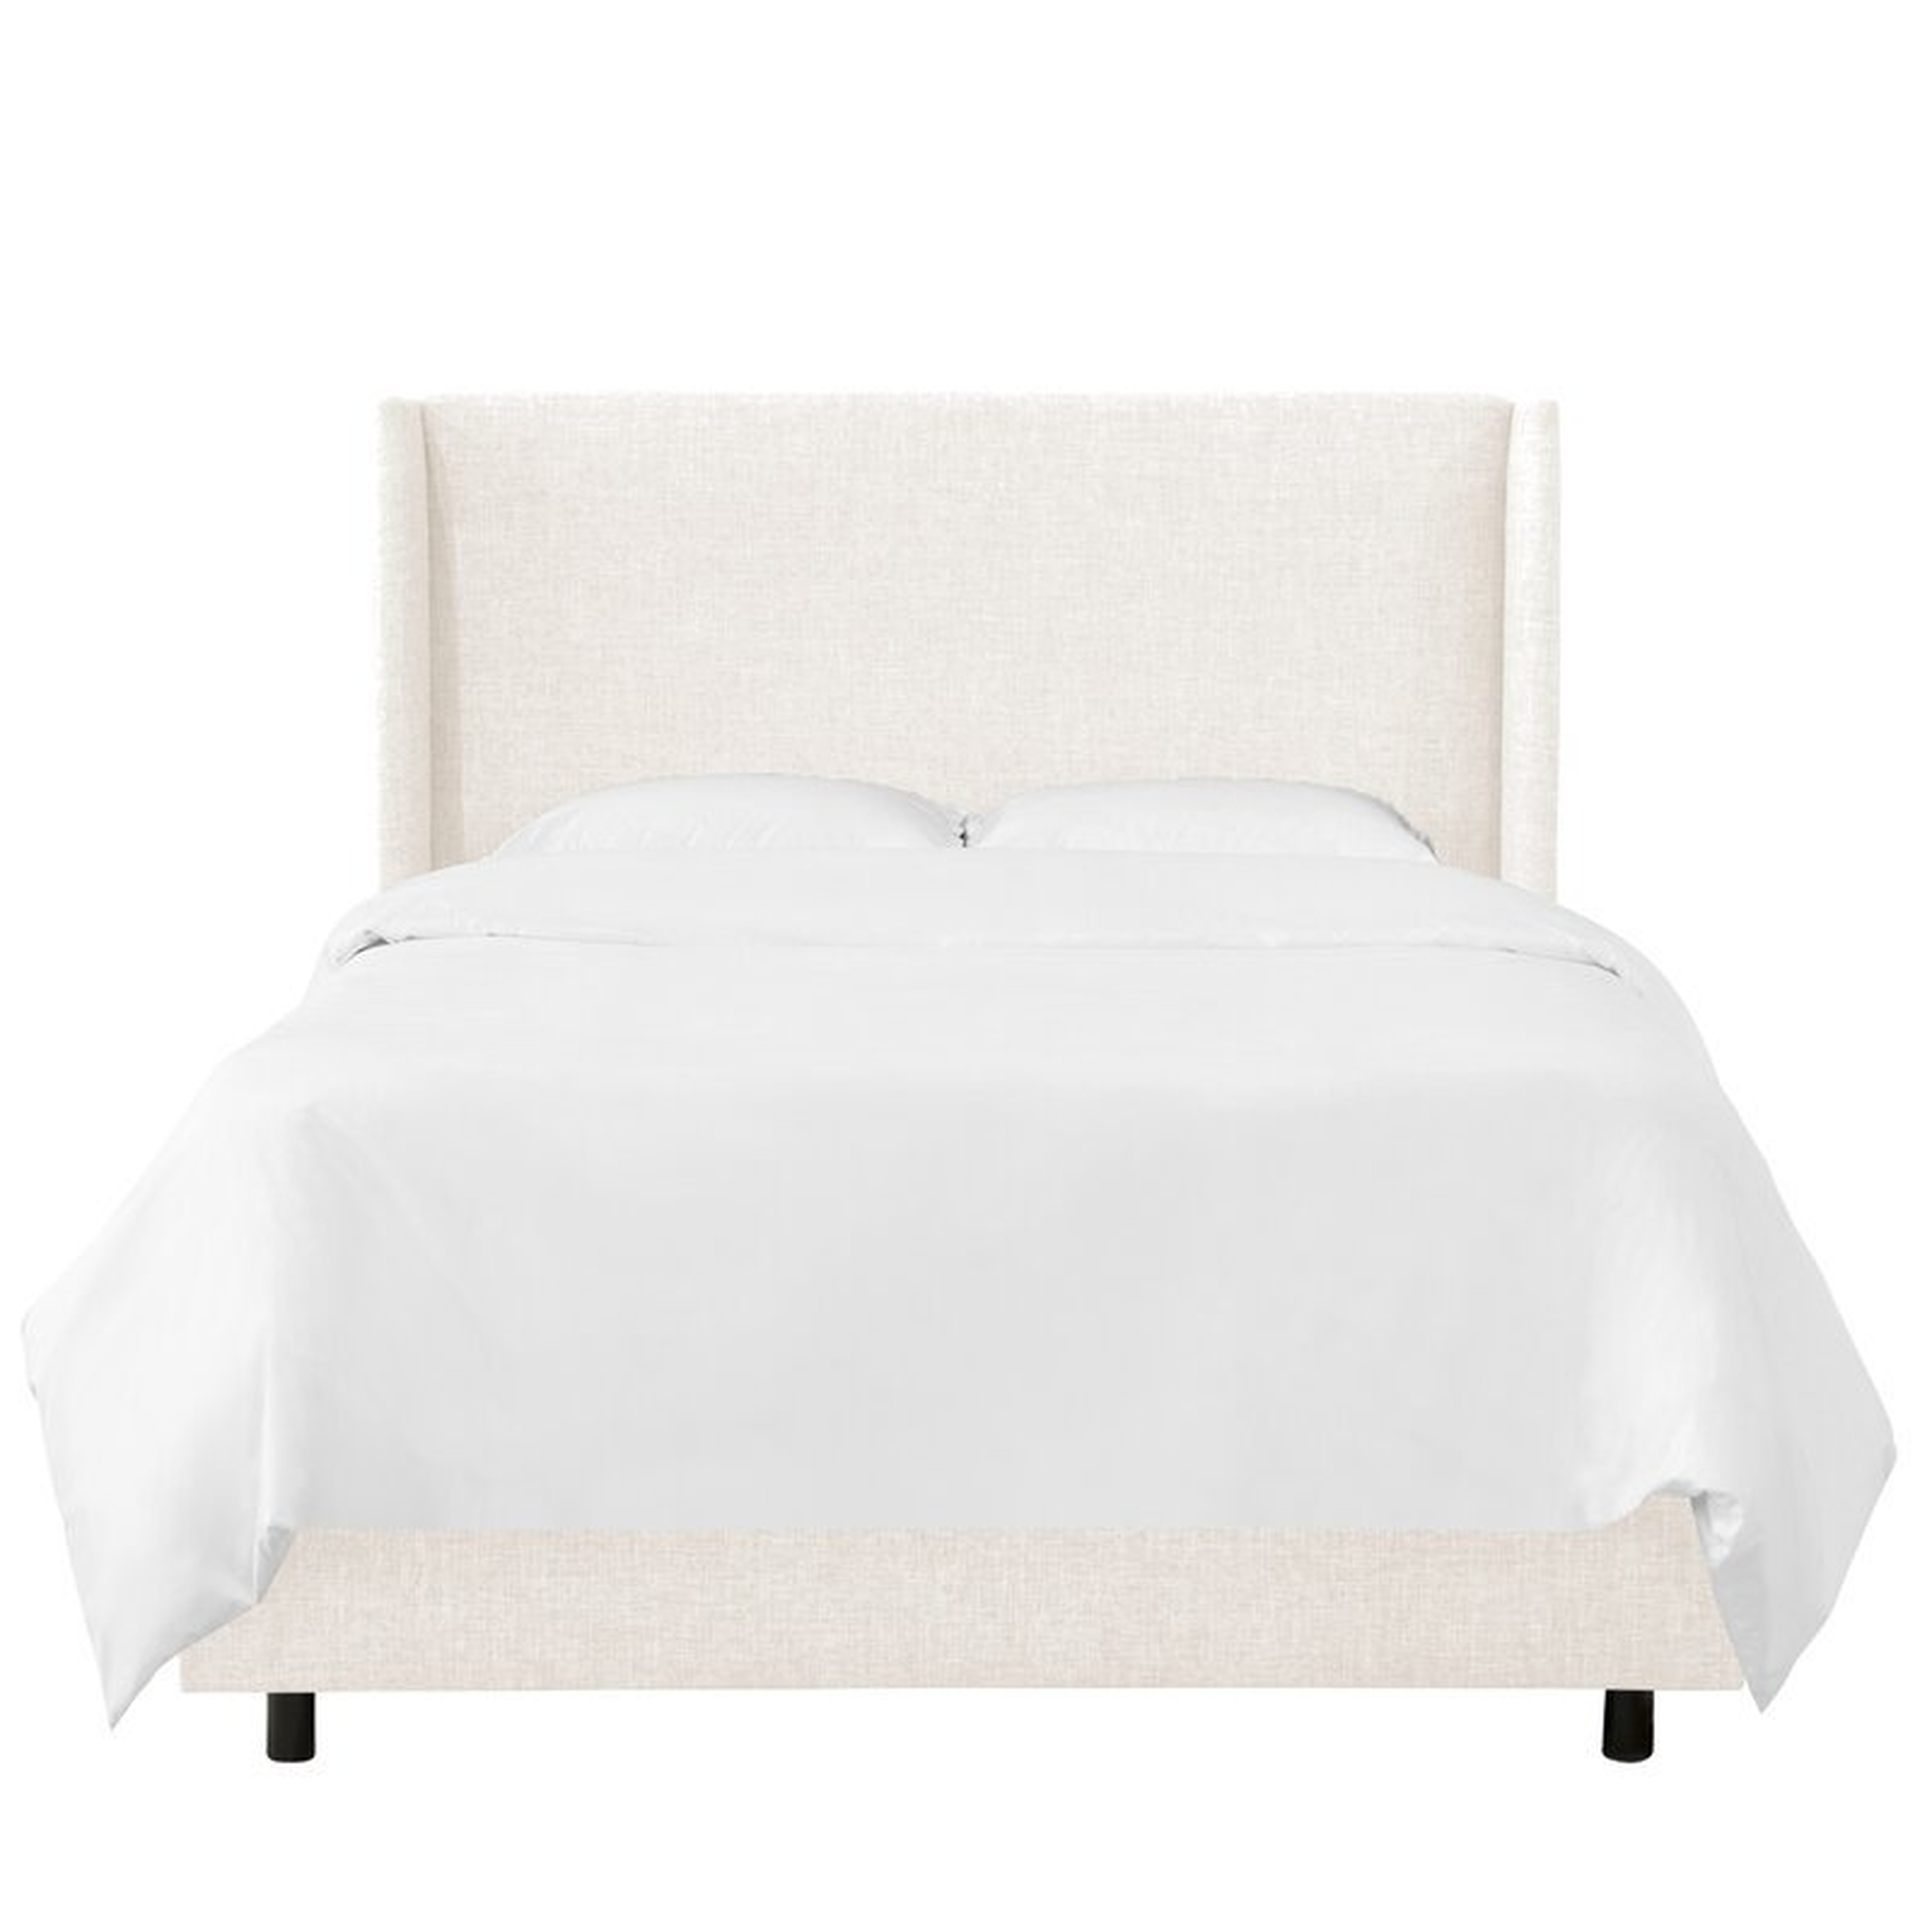 Alrai Upholstered Low Profile Standard Bed White King - Wayfair